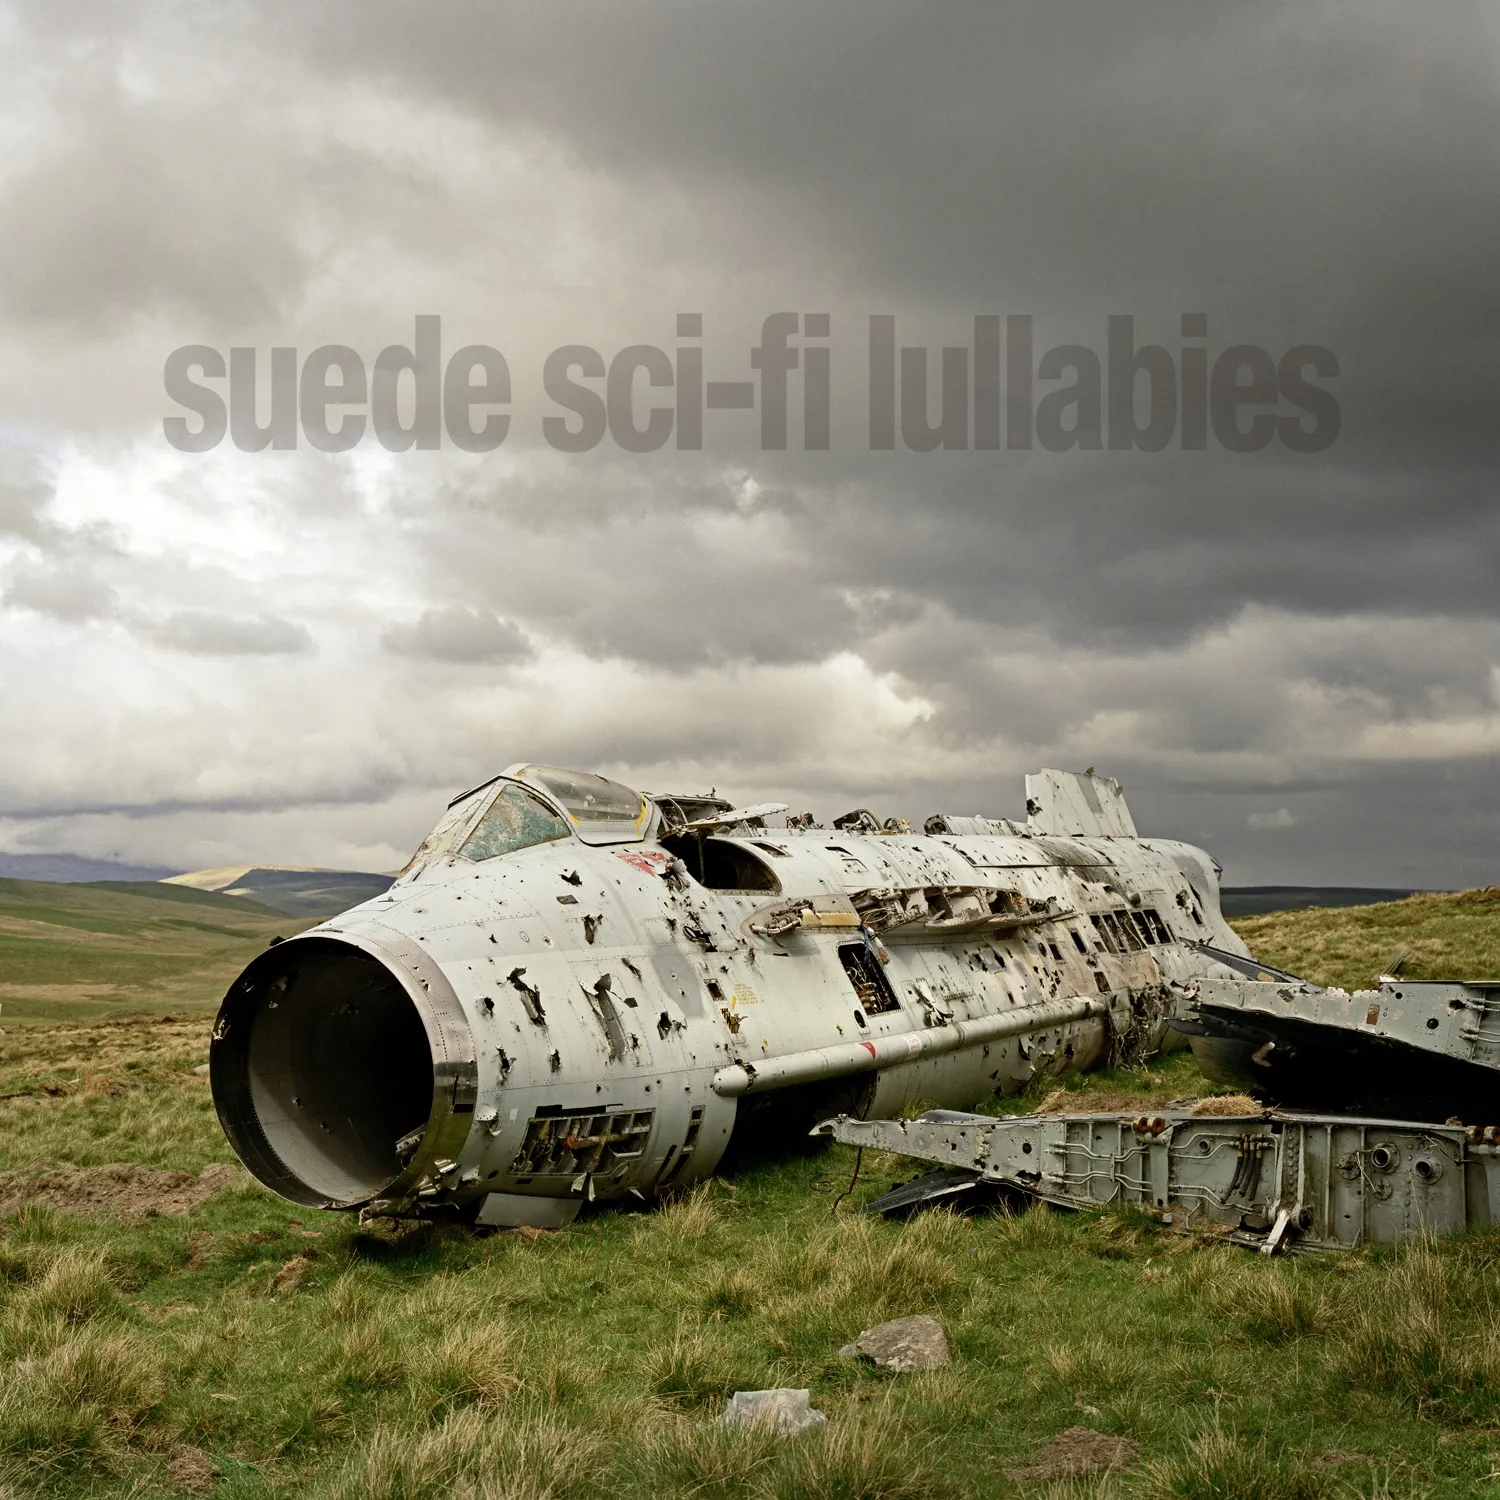 <strong>Suede - Sci Fi Lullabies</strong> (Vinyl LP - black)